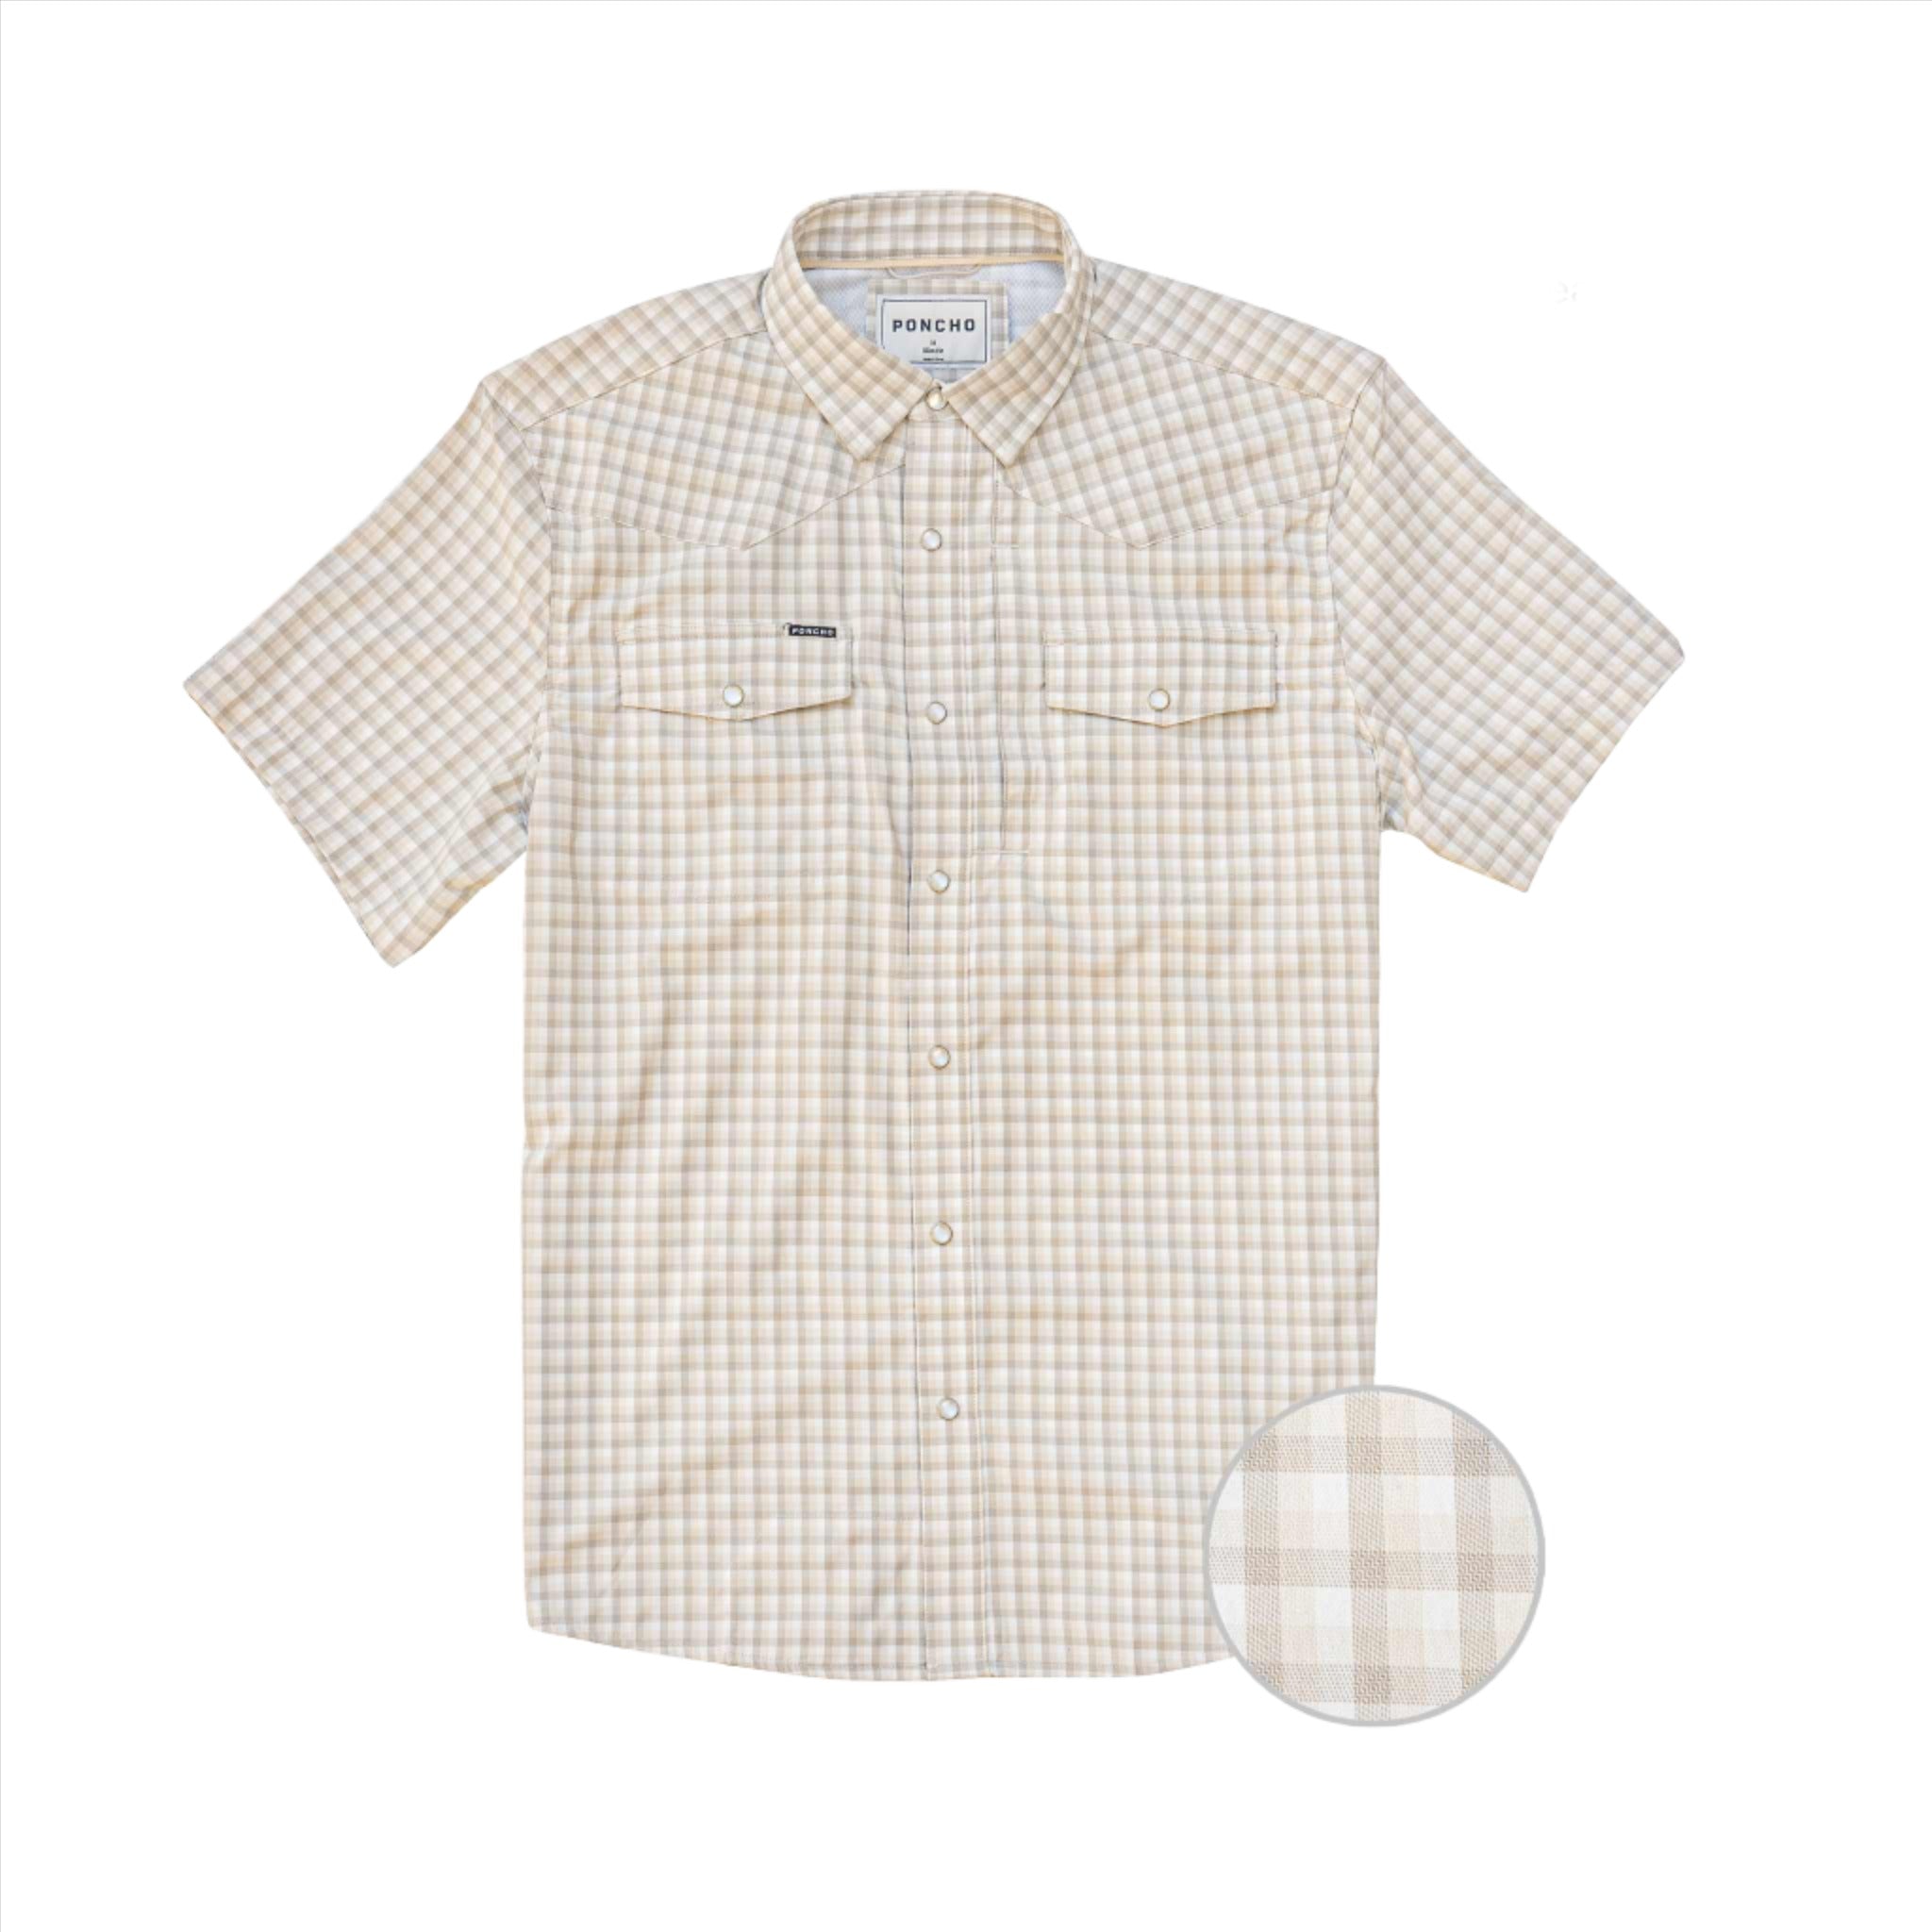 Poncho The Presidio Short Sleeve Shirt